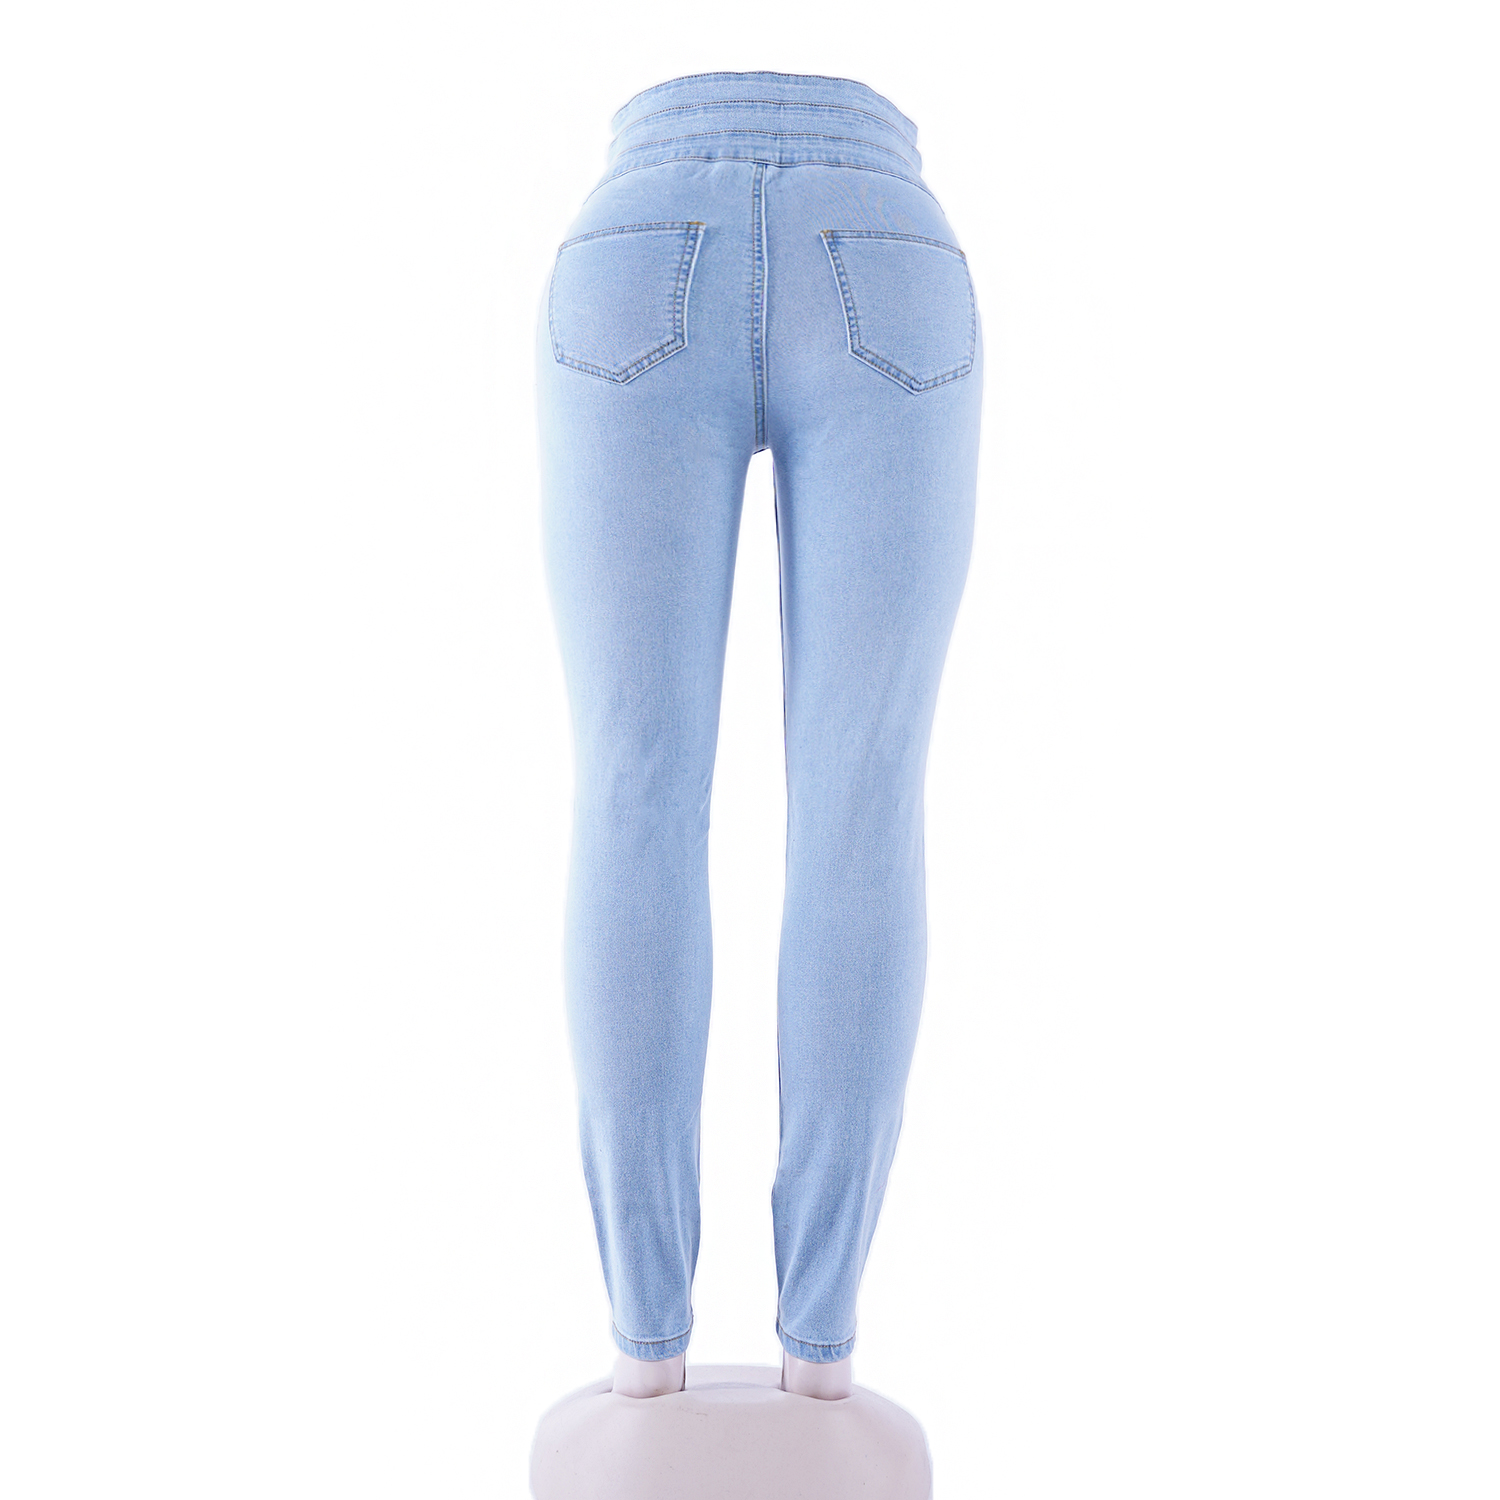 SKYKINGDOM western fashion ladies jeans high waist 3 buttons light bluer ripped women jeans